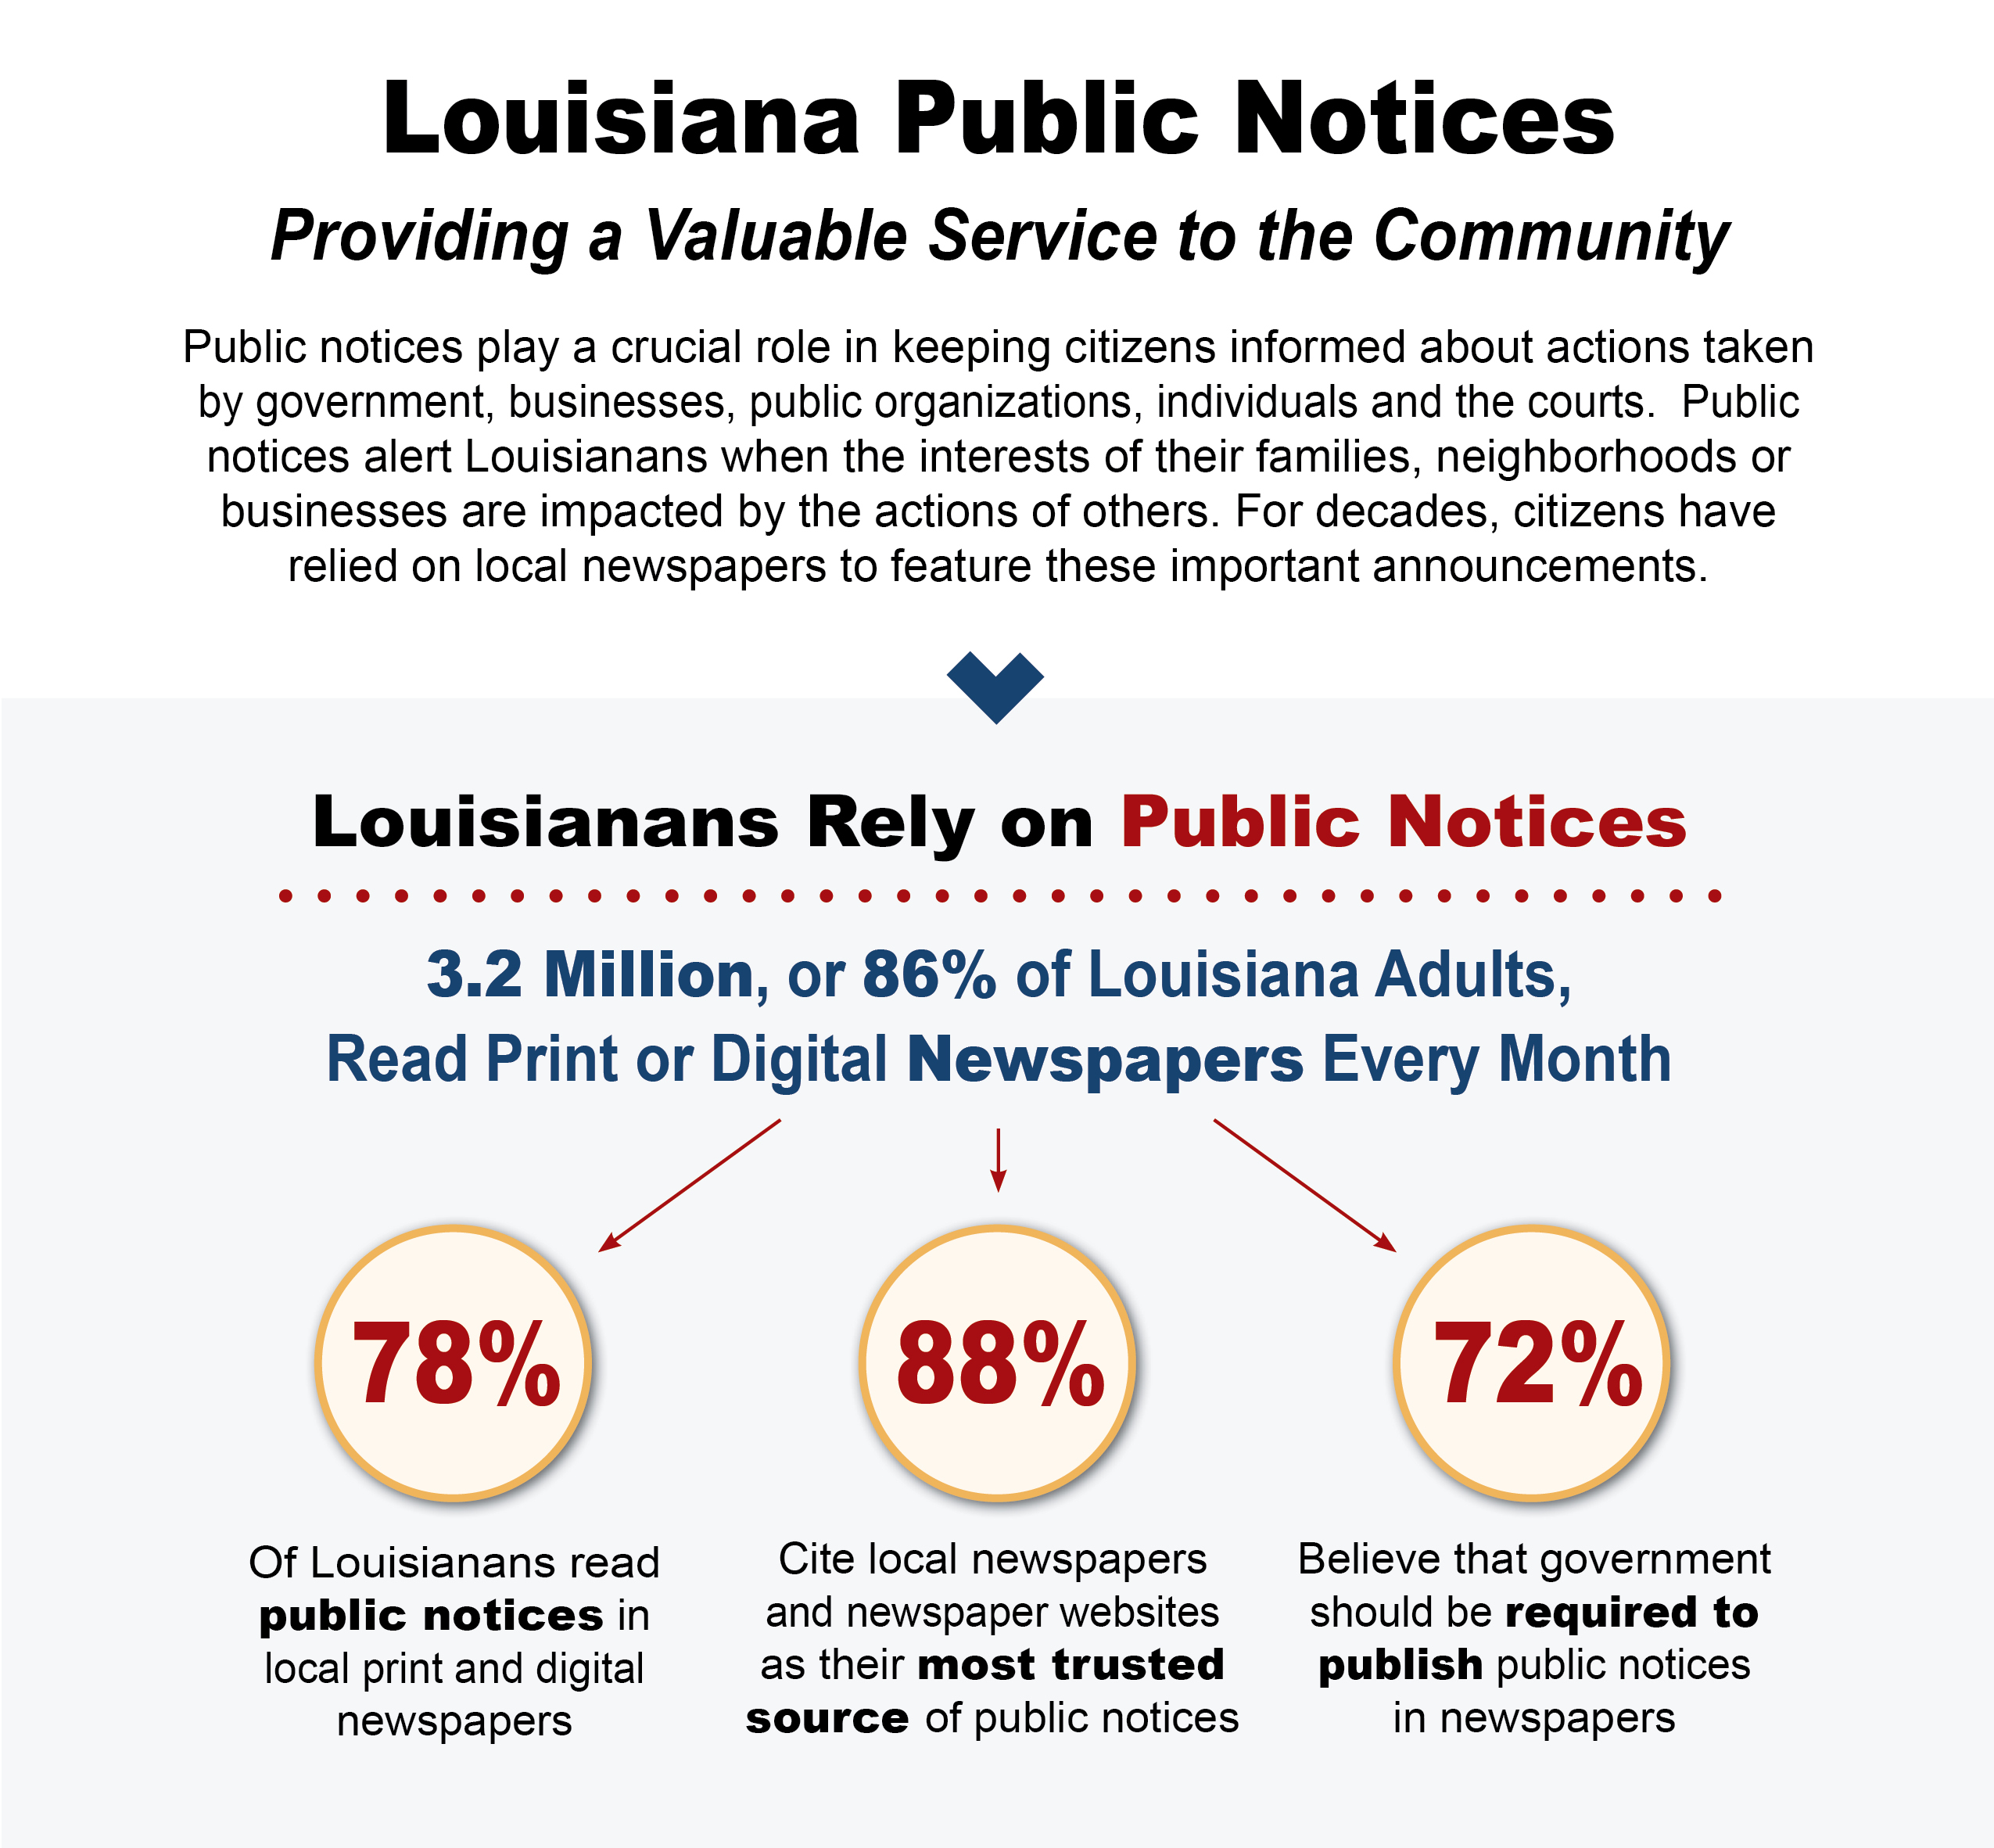 Louisiana Publication Notices 2